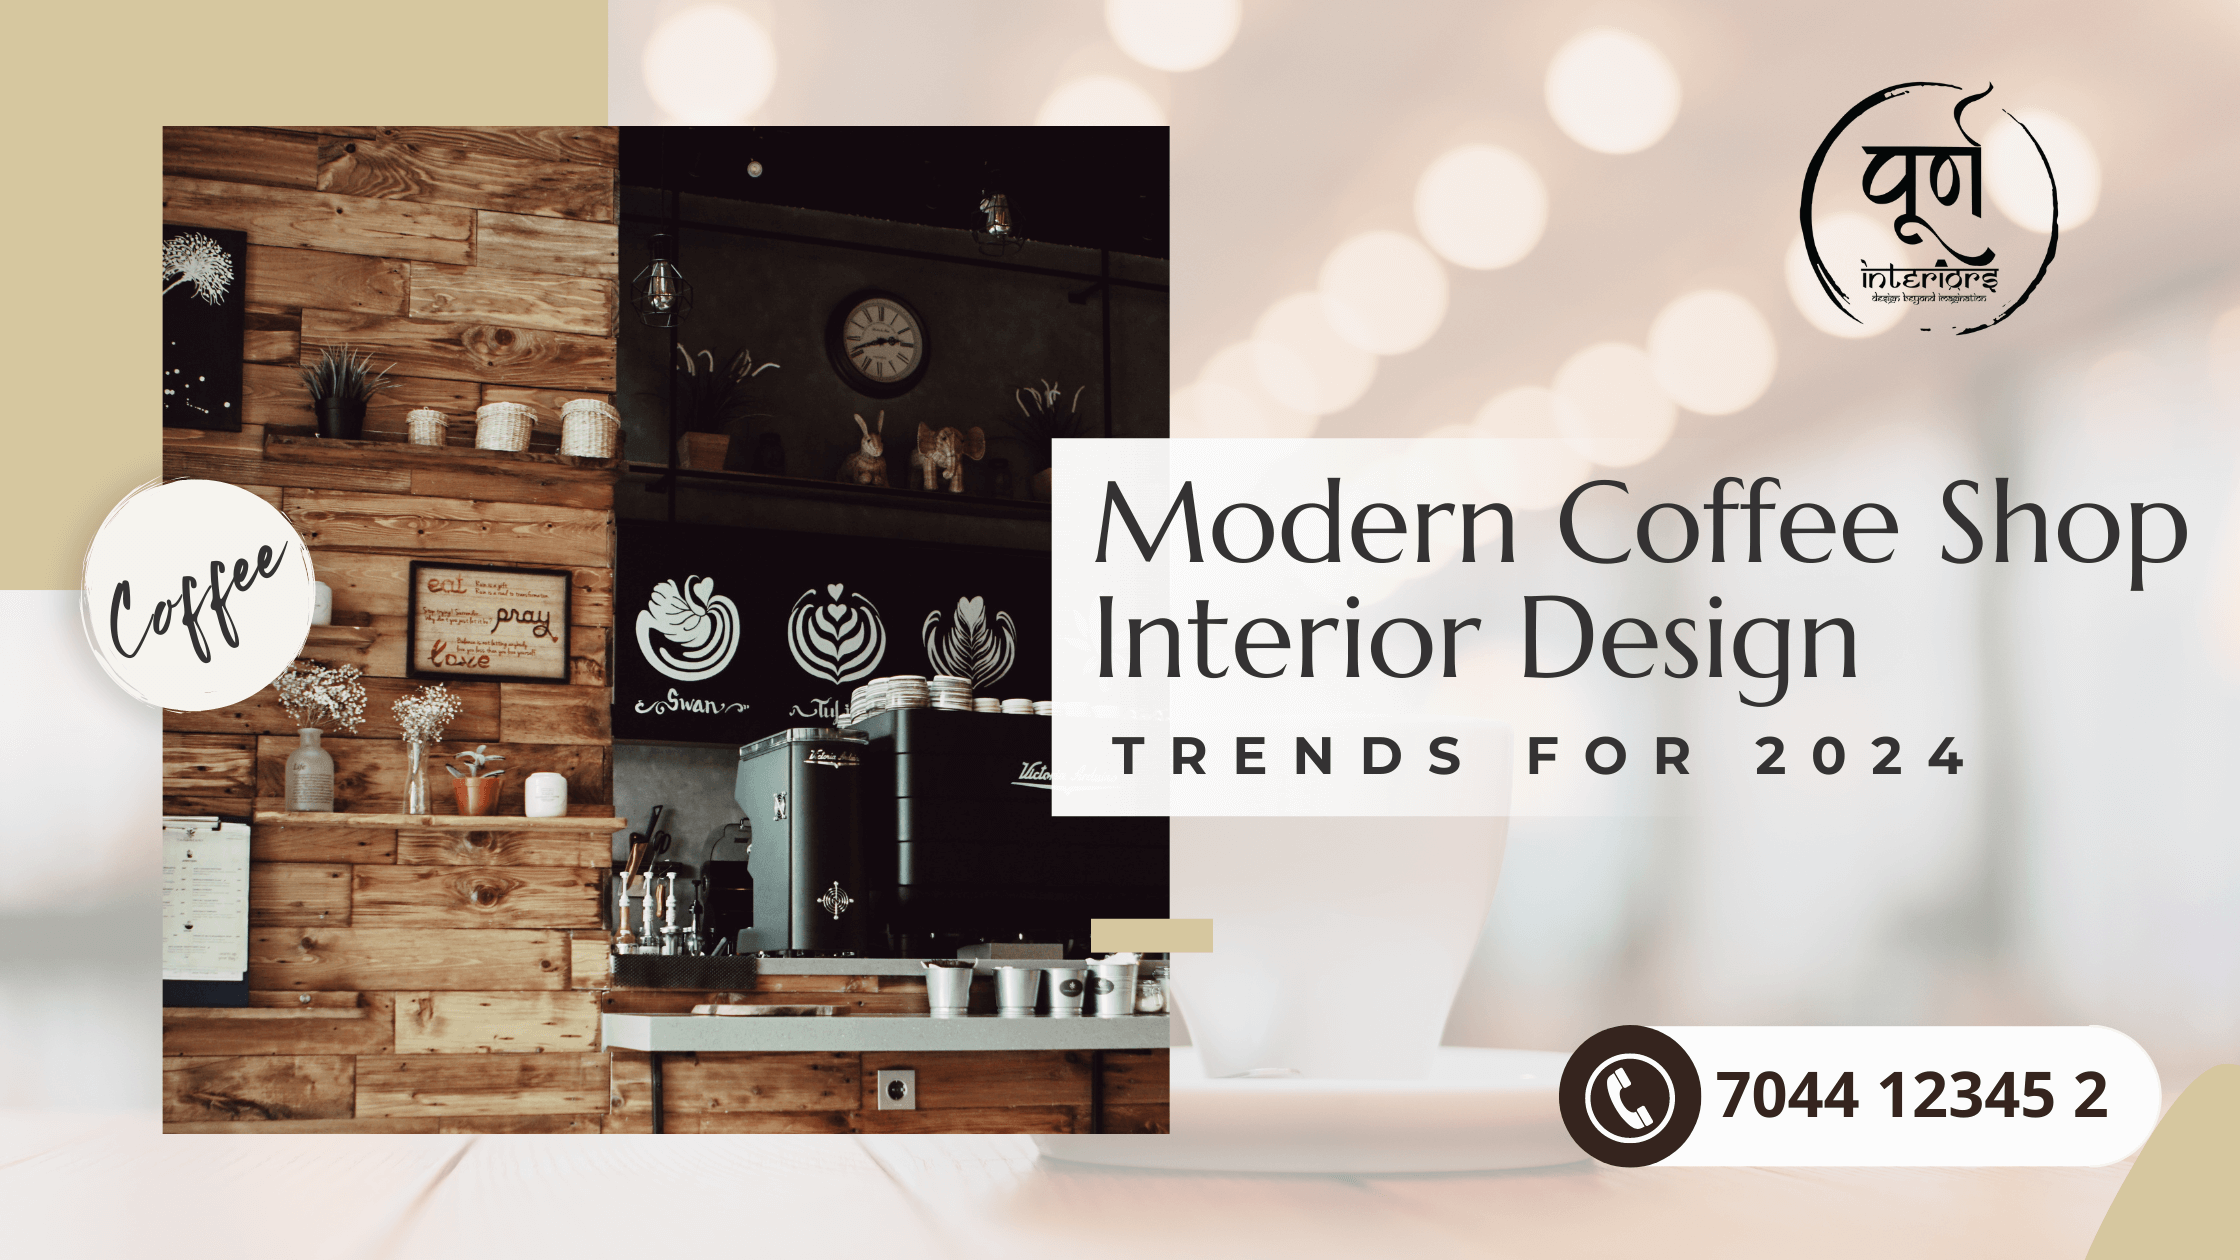 Modern Coffee Shop Interior Design Trends for 2024